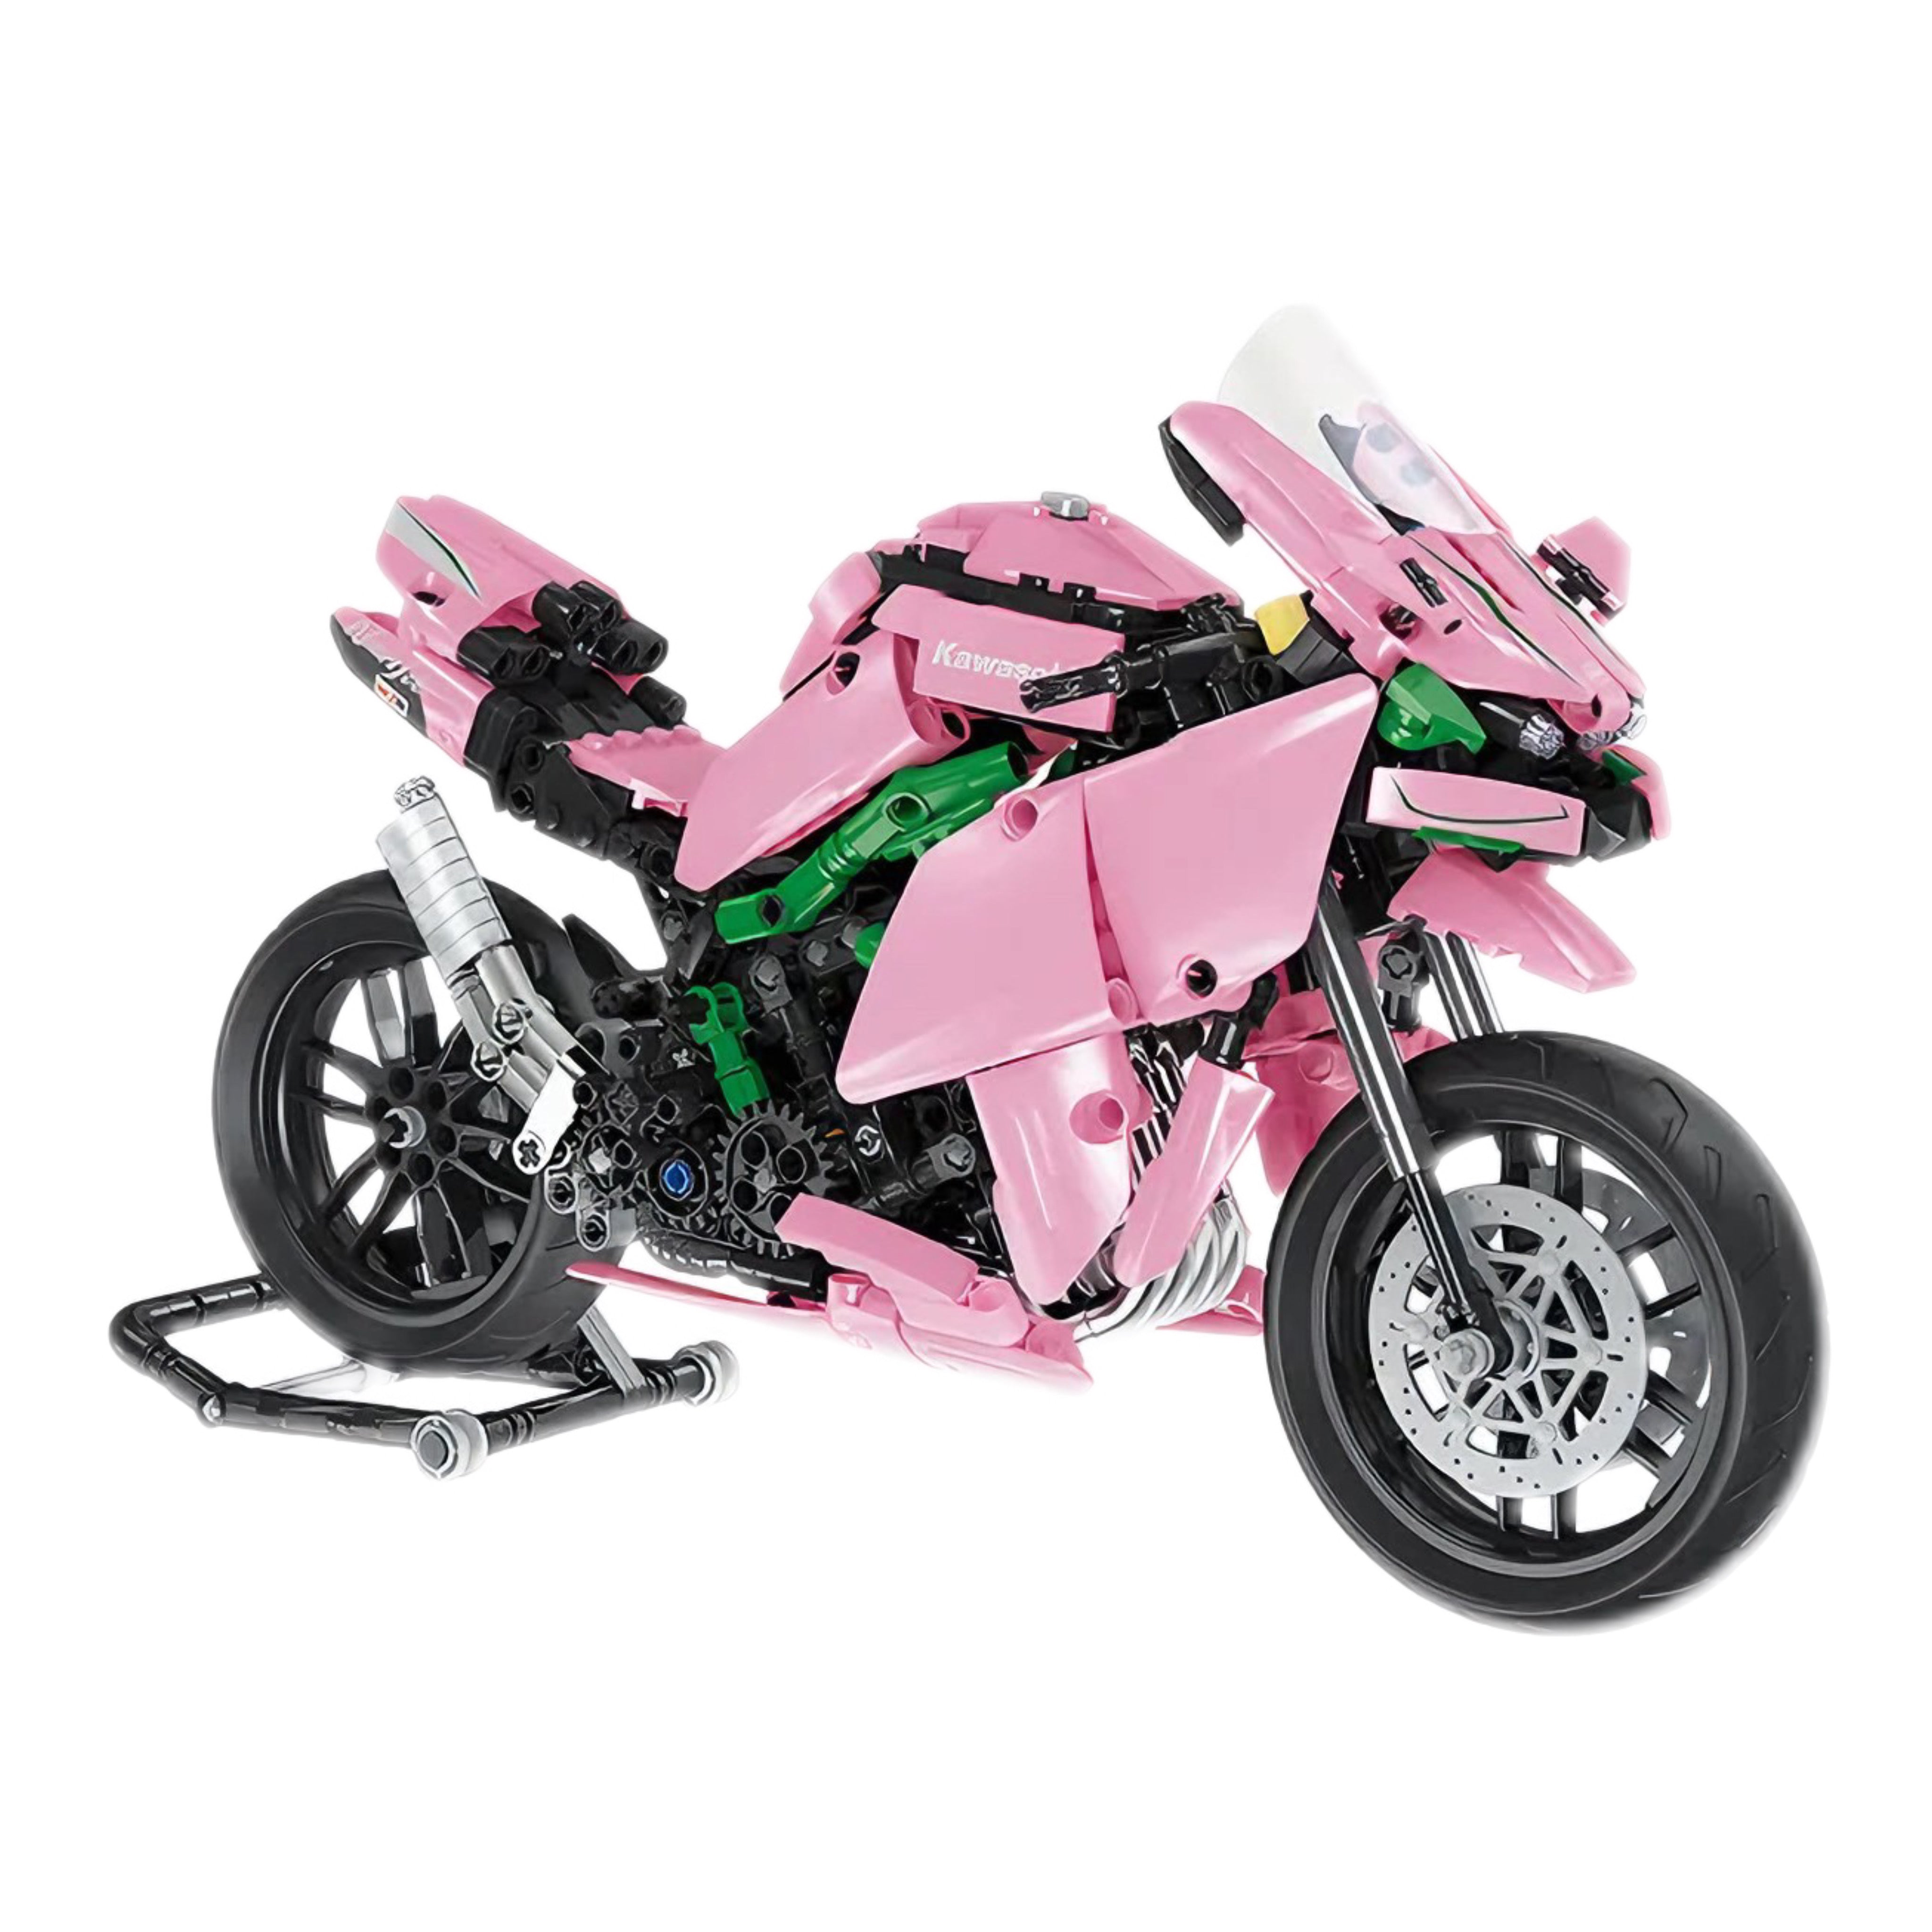 Kawasaki Ninja H2R (Pink Edition)